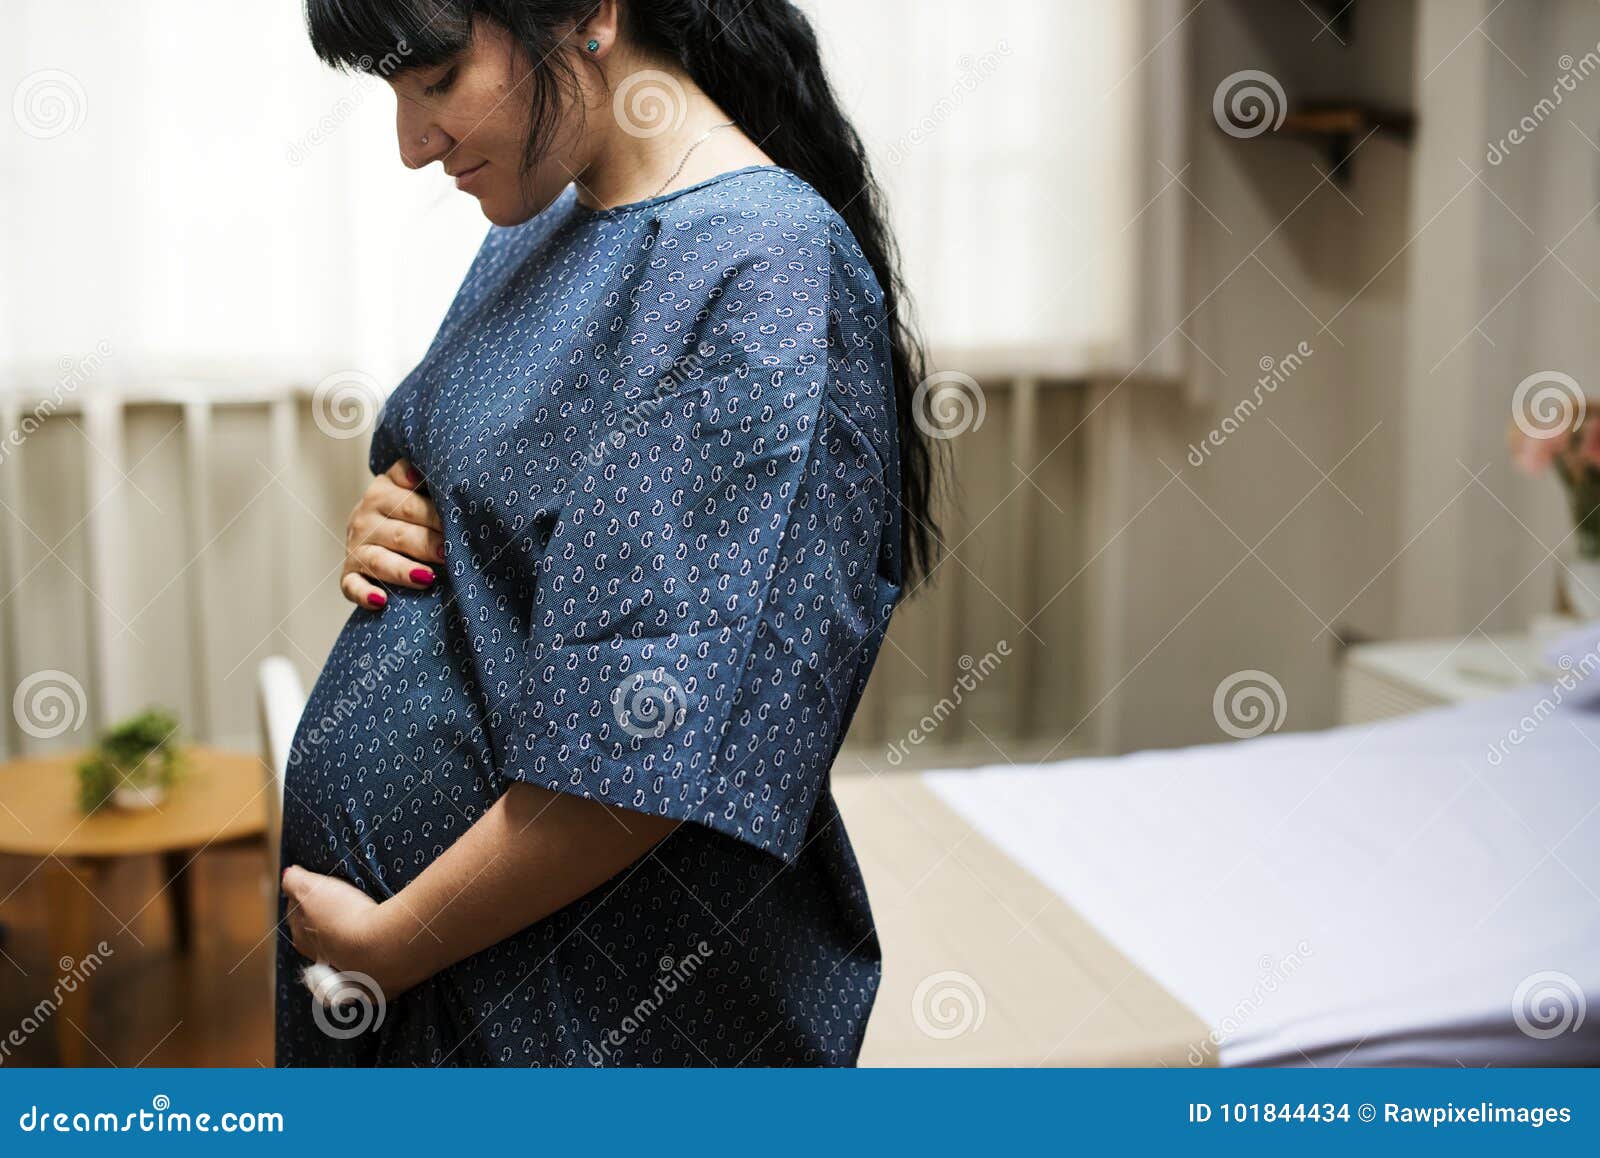 a trimester pregnant woman